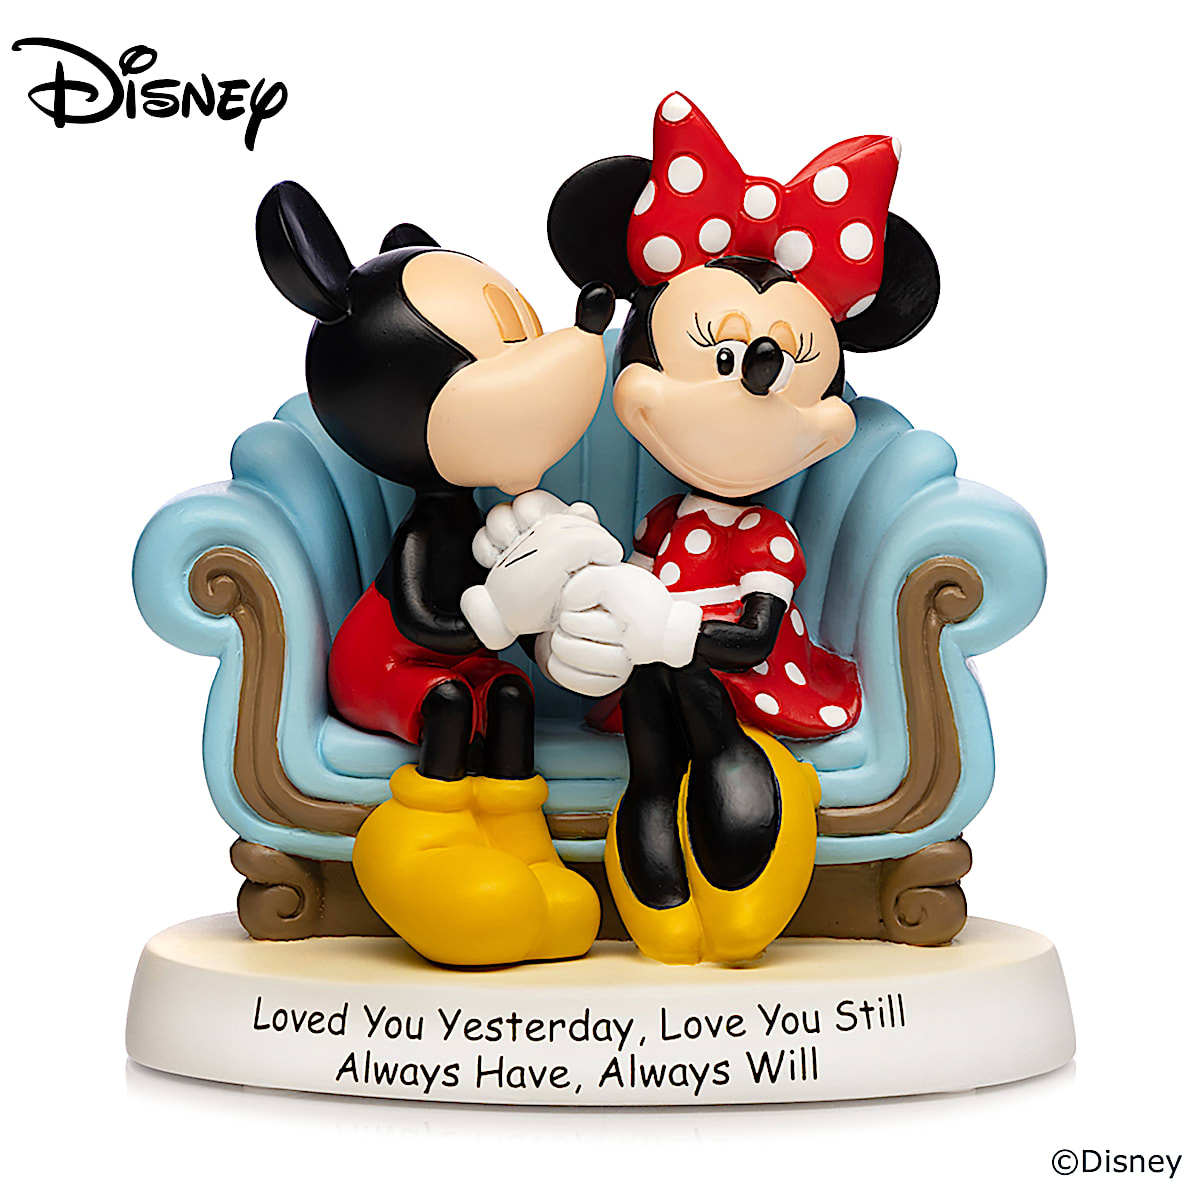 https://media.hamiltoncollection.com/images/d_ham_defaultImage.png/w_1200,h_1200,q_auto,f_auto,dpr_1,e_sharpen:100/hamilton-collection/0909888001/Disney-Mickey-Mouse-%26-Minnie-Mouse-%22Love-You-Still%22-Figurine